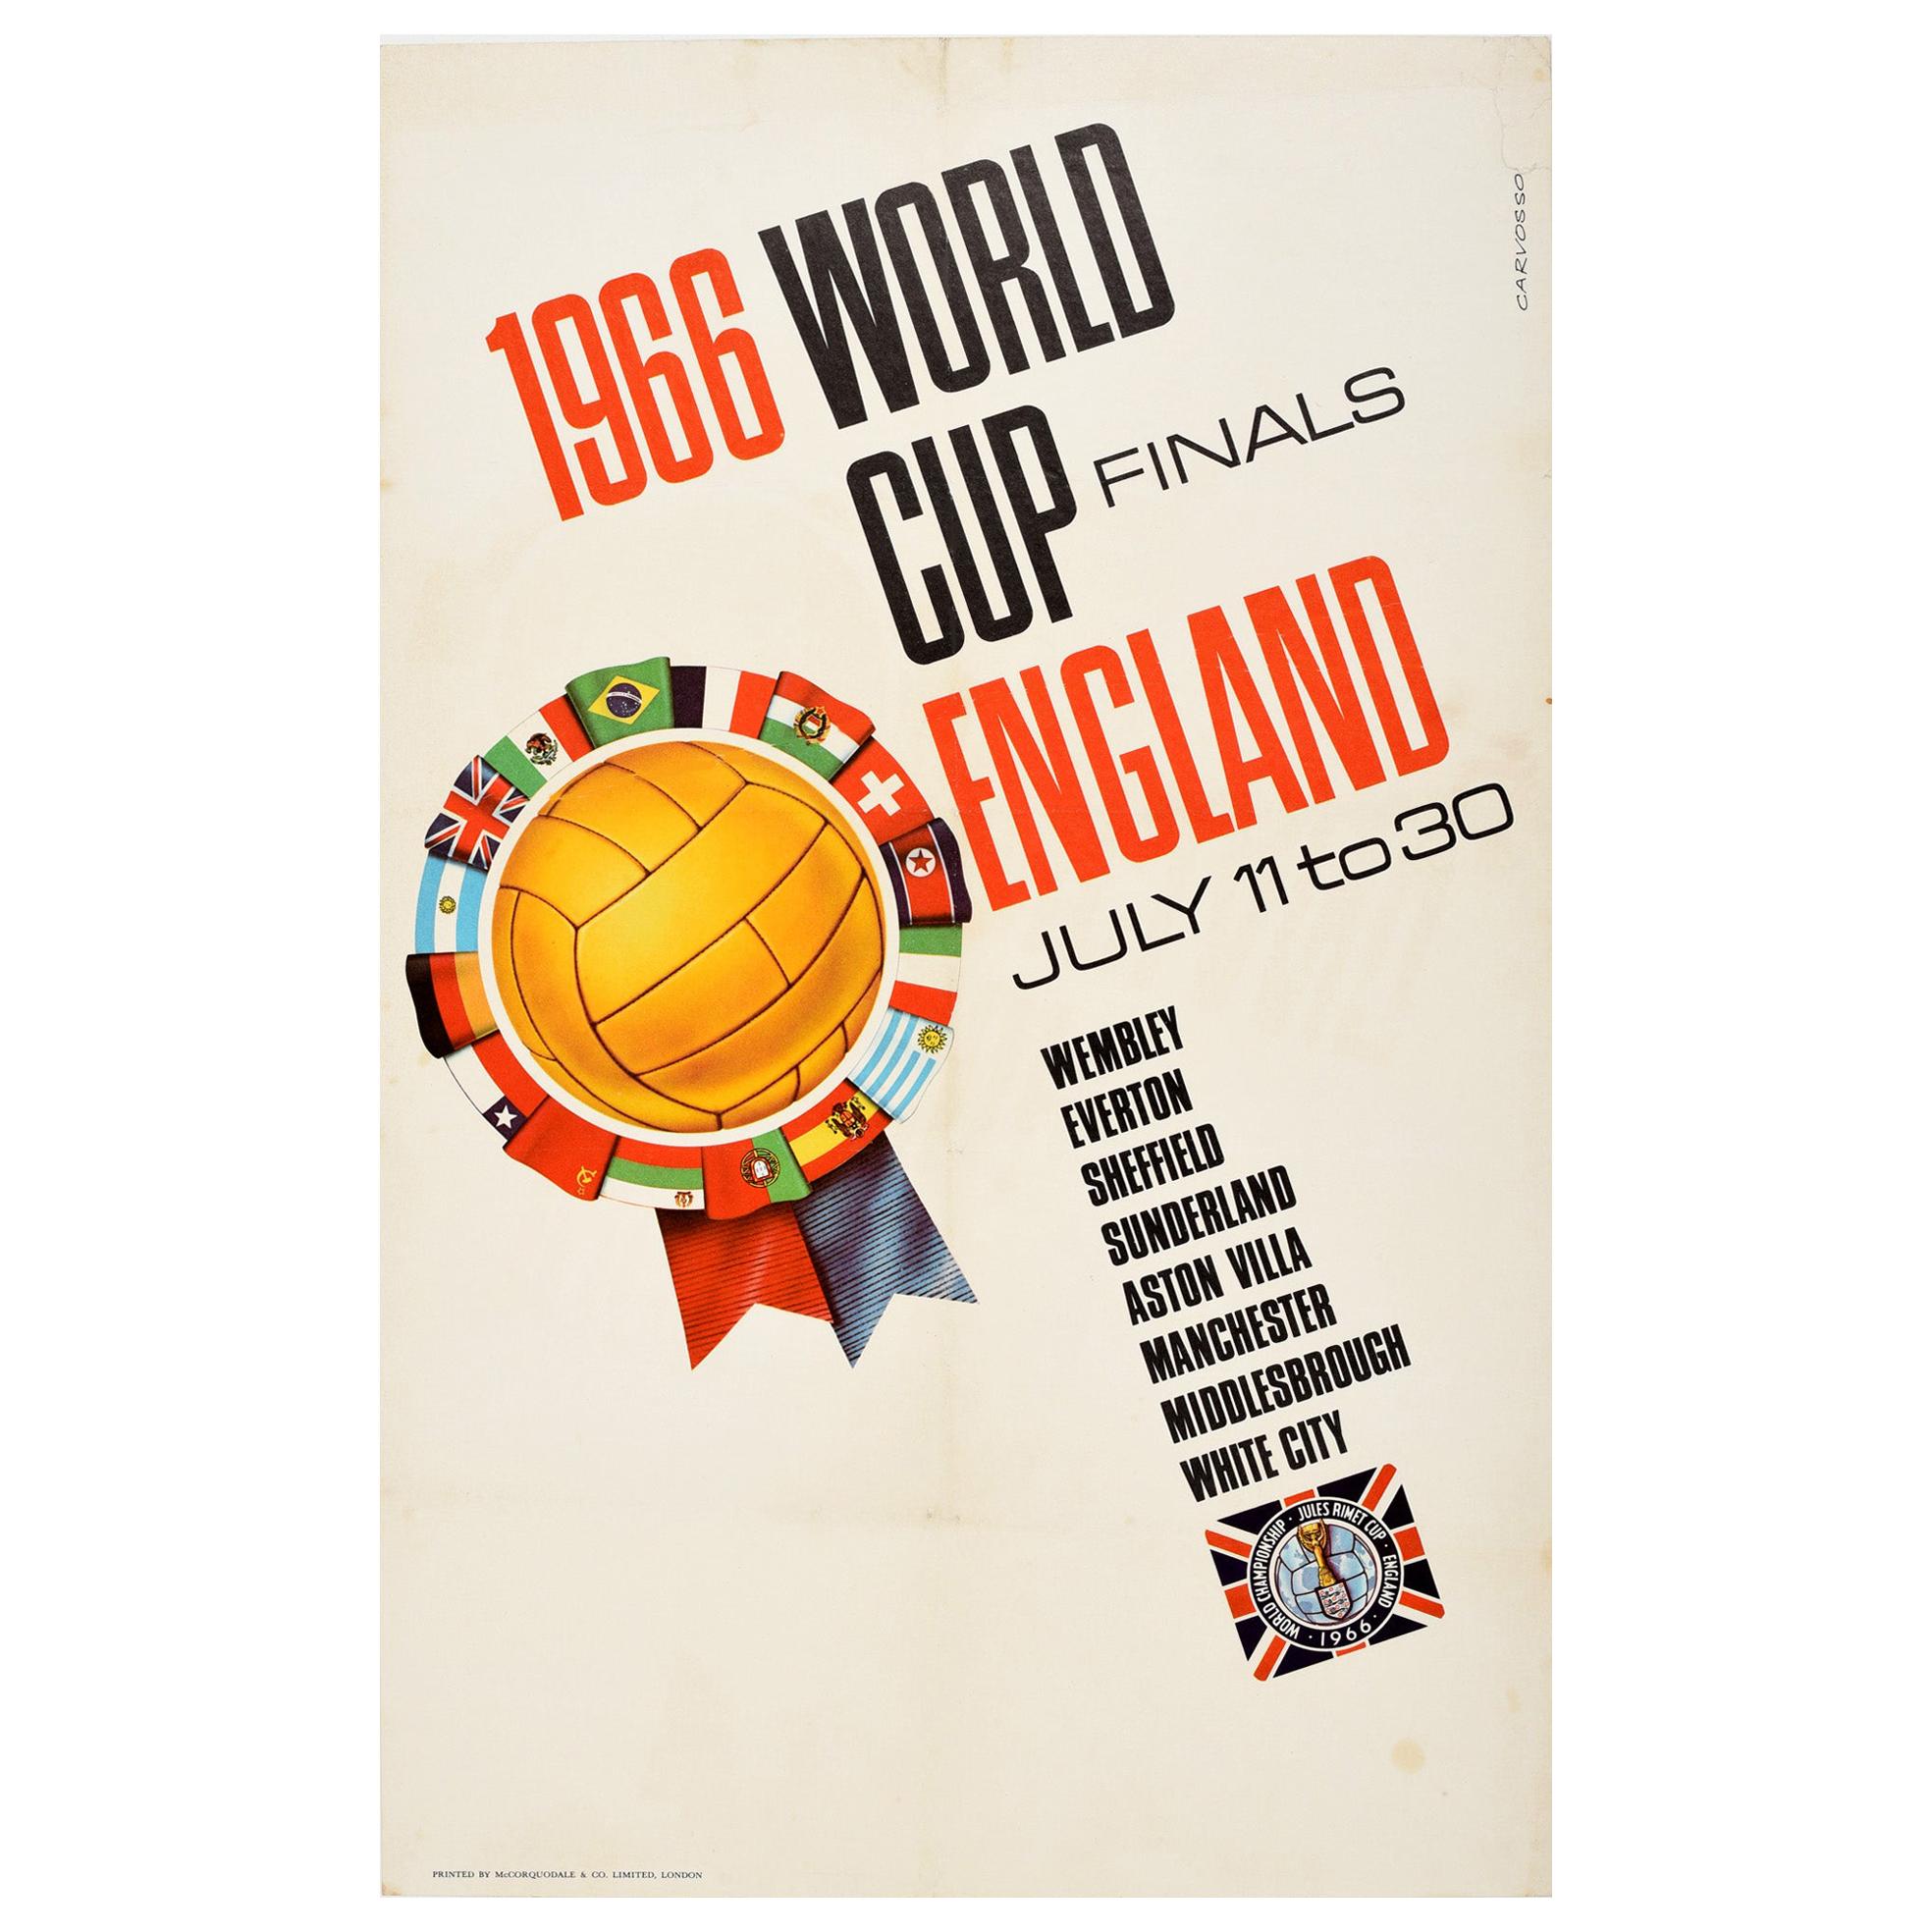 Original Vintage Poster 1966 World Cup Finals England Wembley July Football FIFA